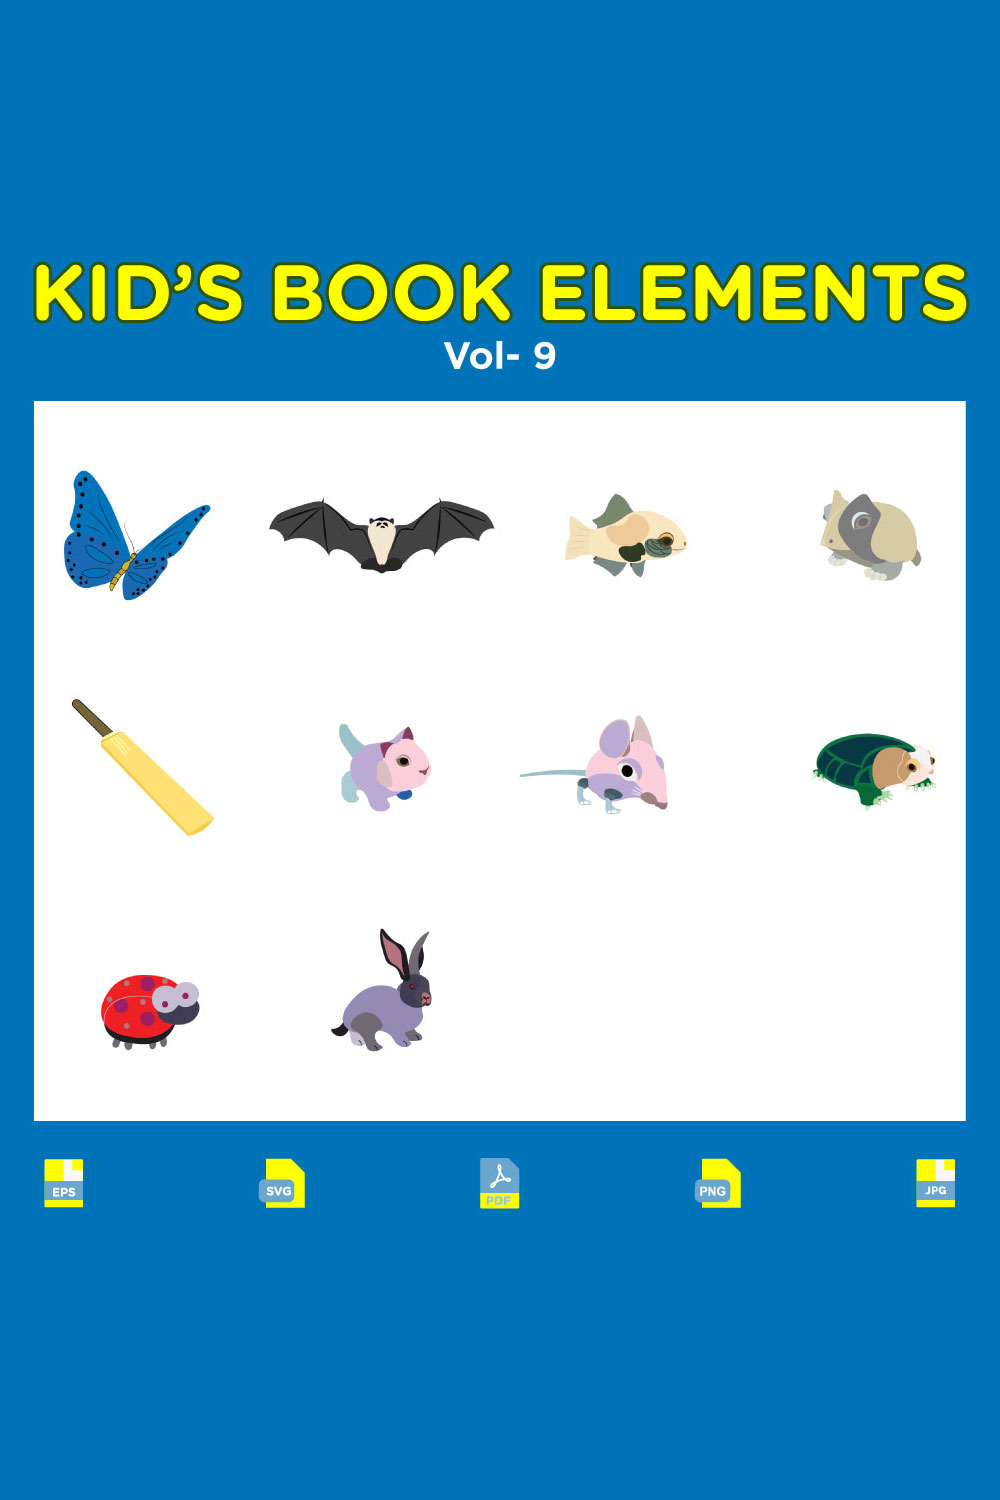 Kids Book Elements Vol-9 pinterest preview image.